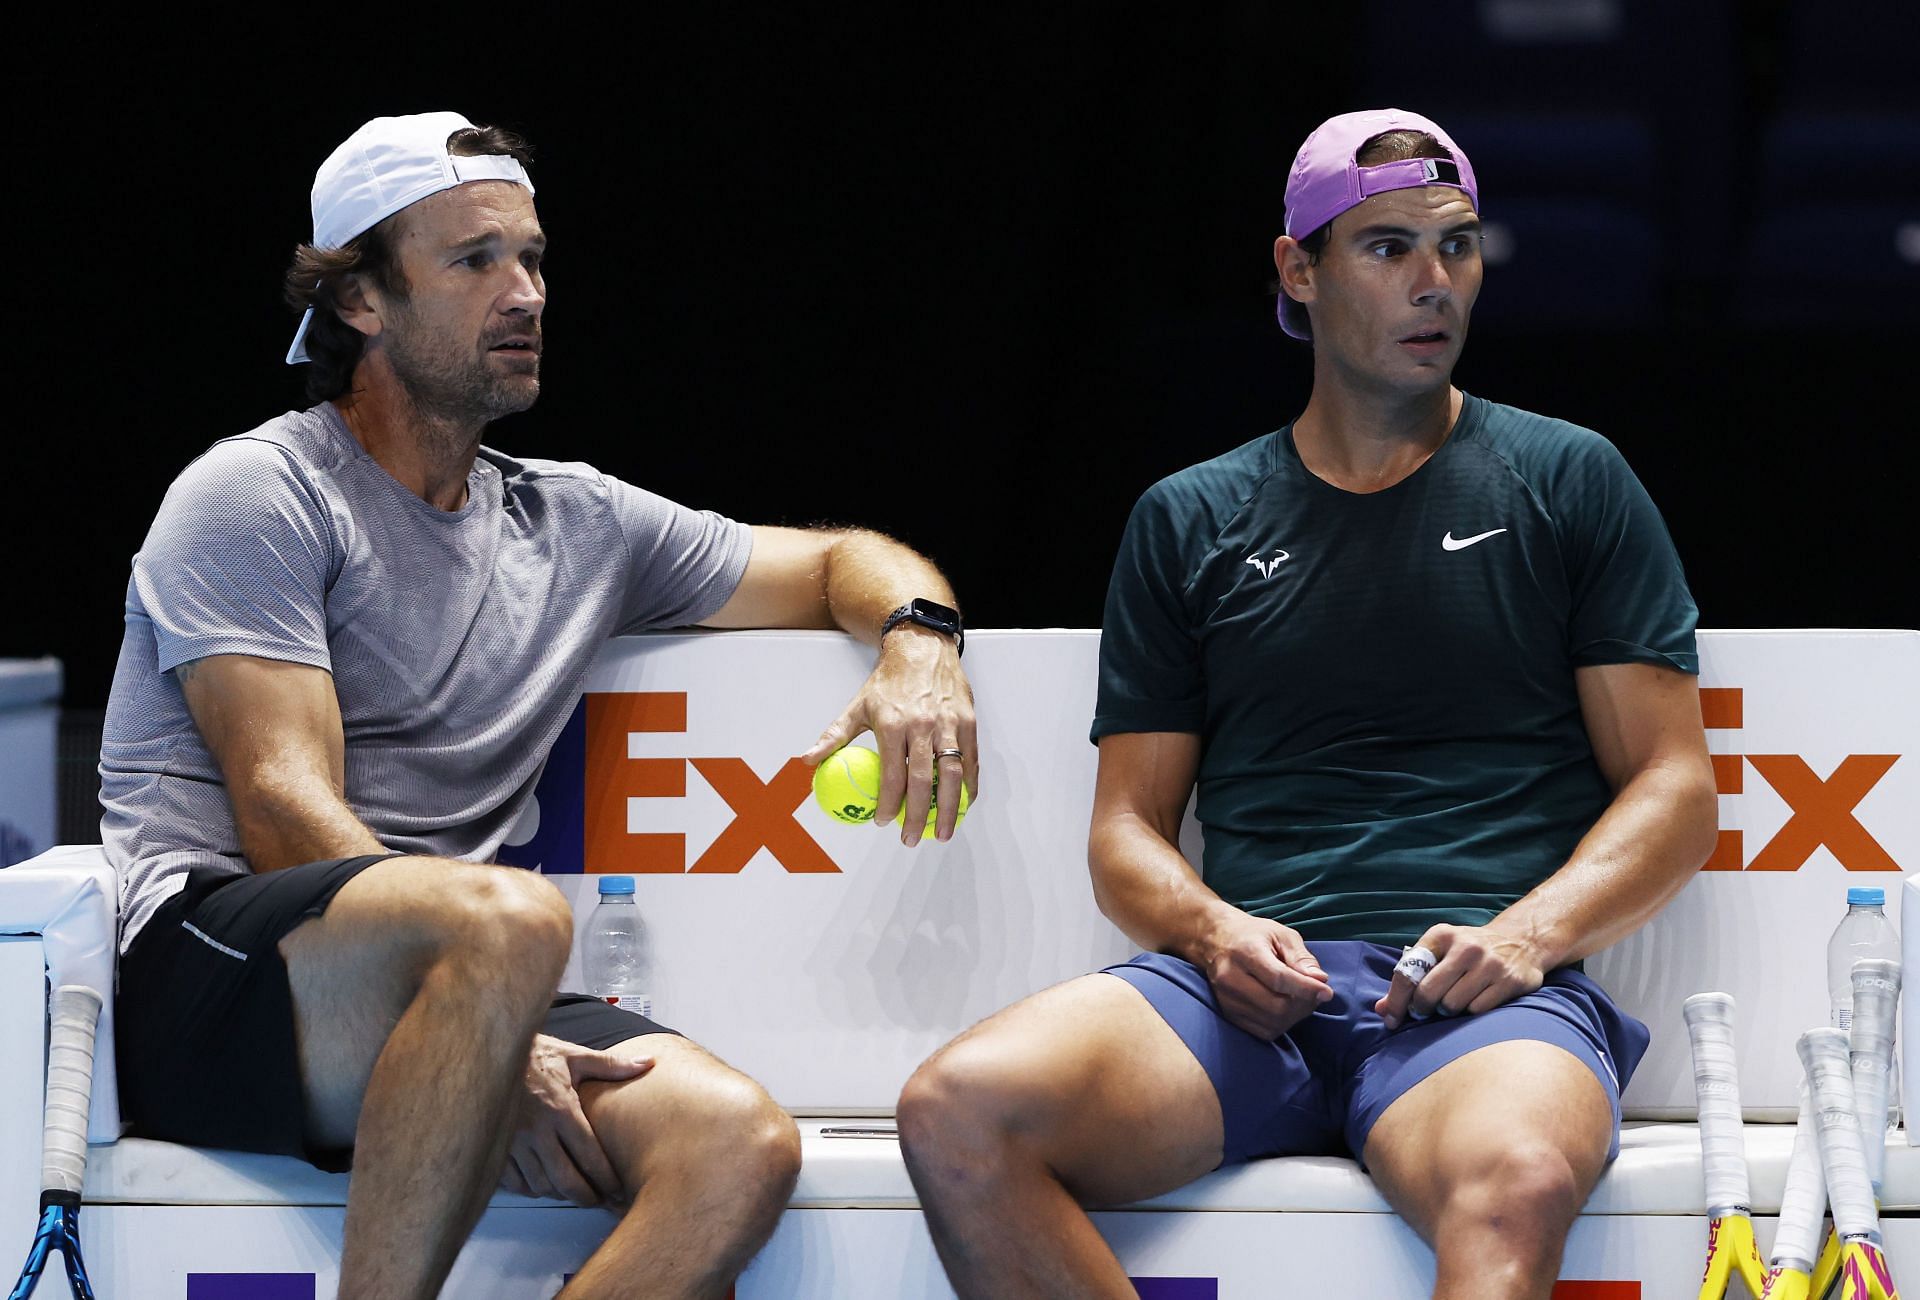 Moya and Nadal at the Nitto ATP World Tour Finals